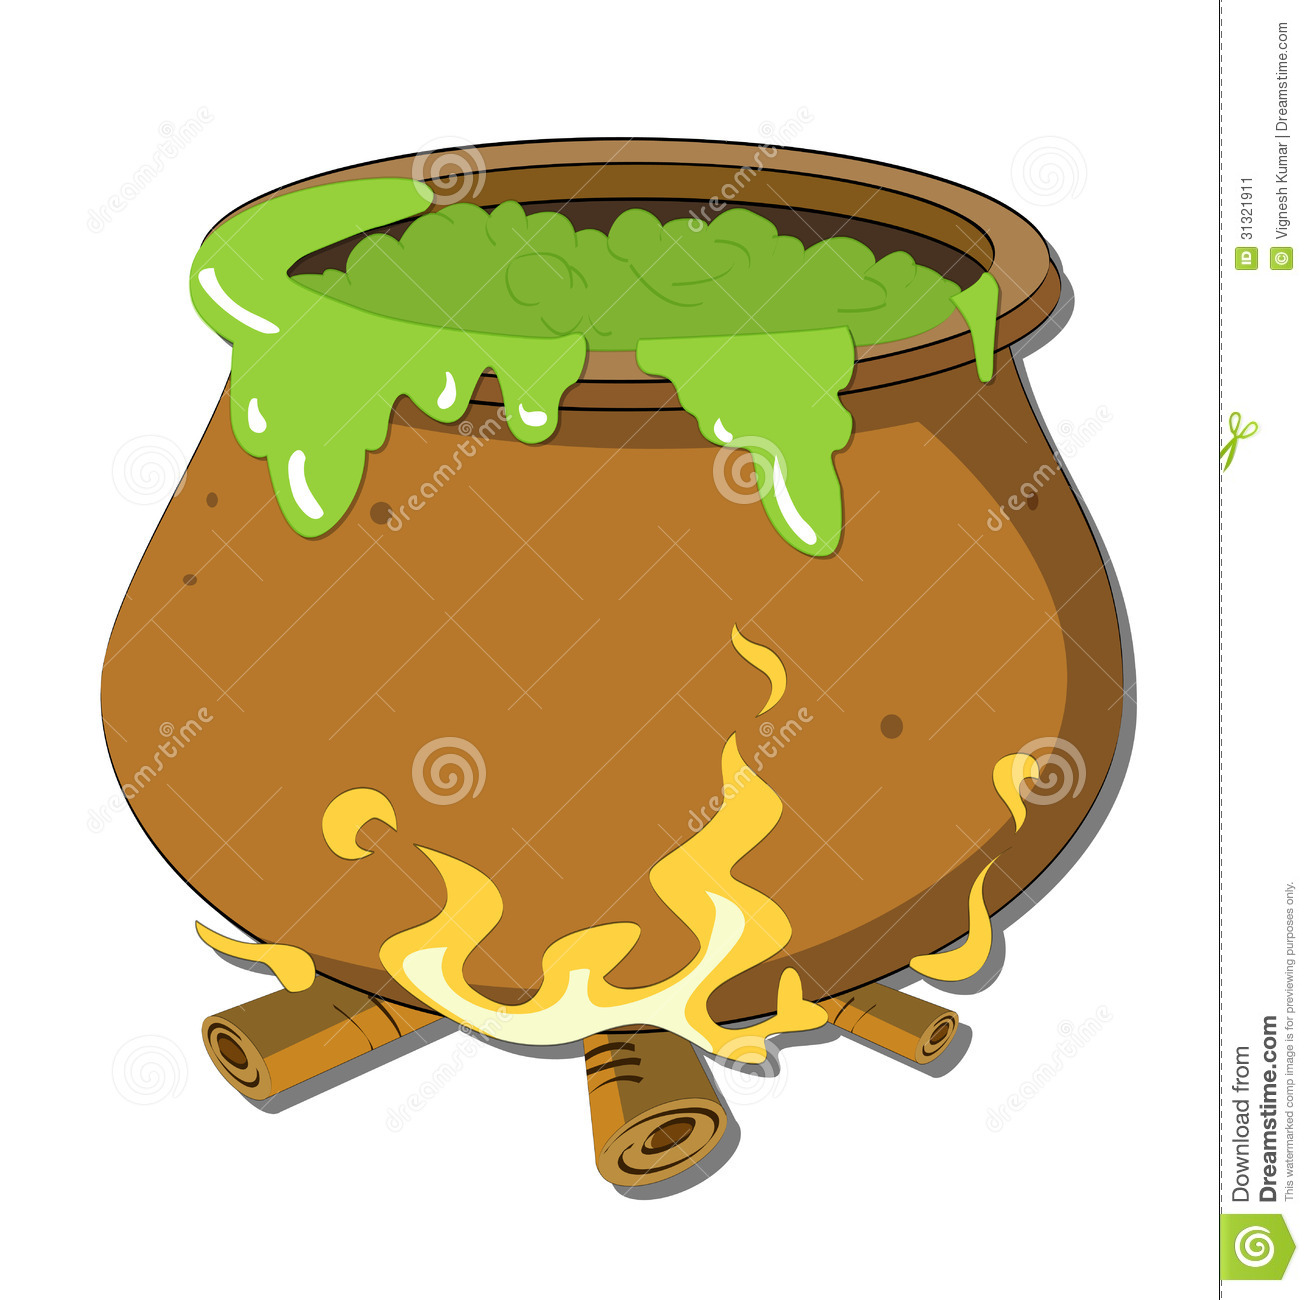 Witch's Cauldron Stock Image.